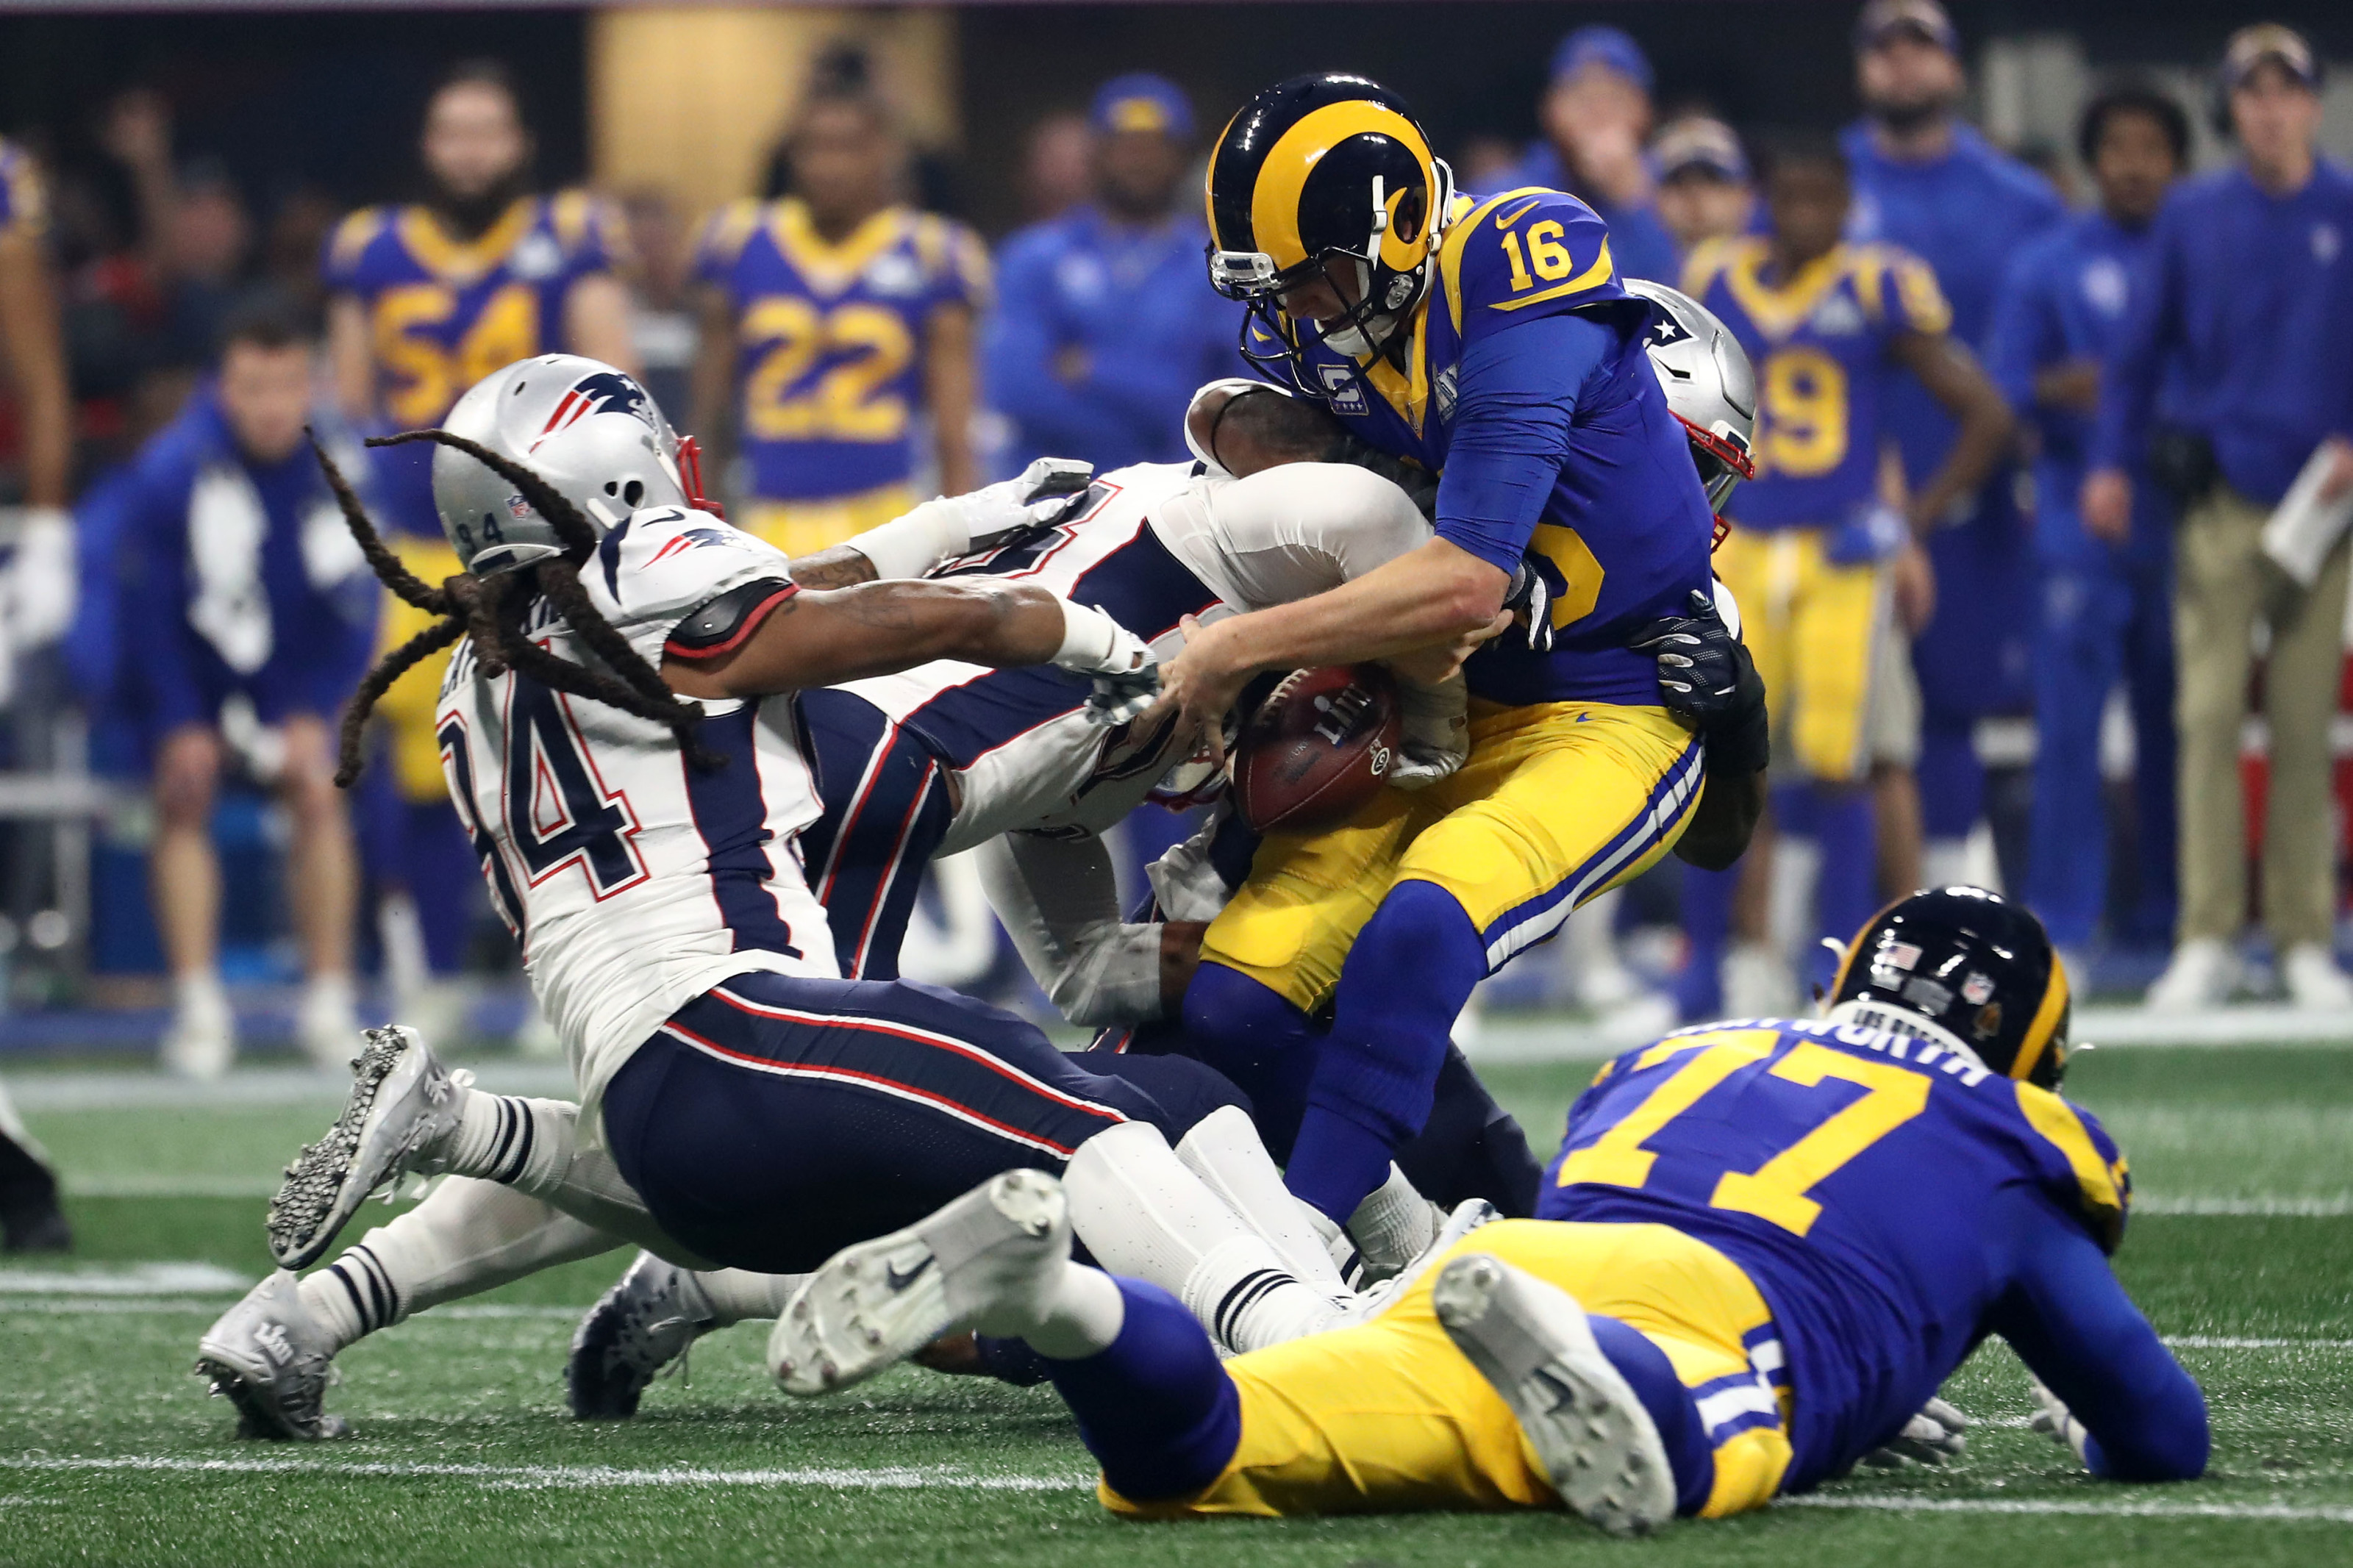 Super Bowl 2019: Comparing Tom Brady to Jared Goff